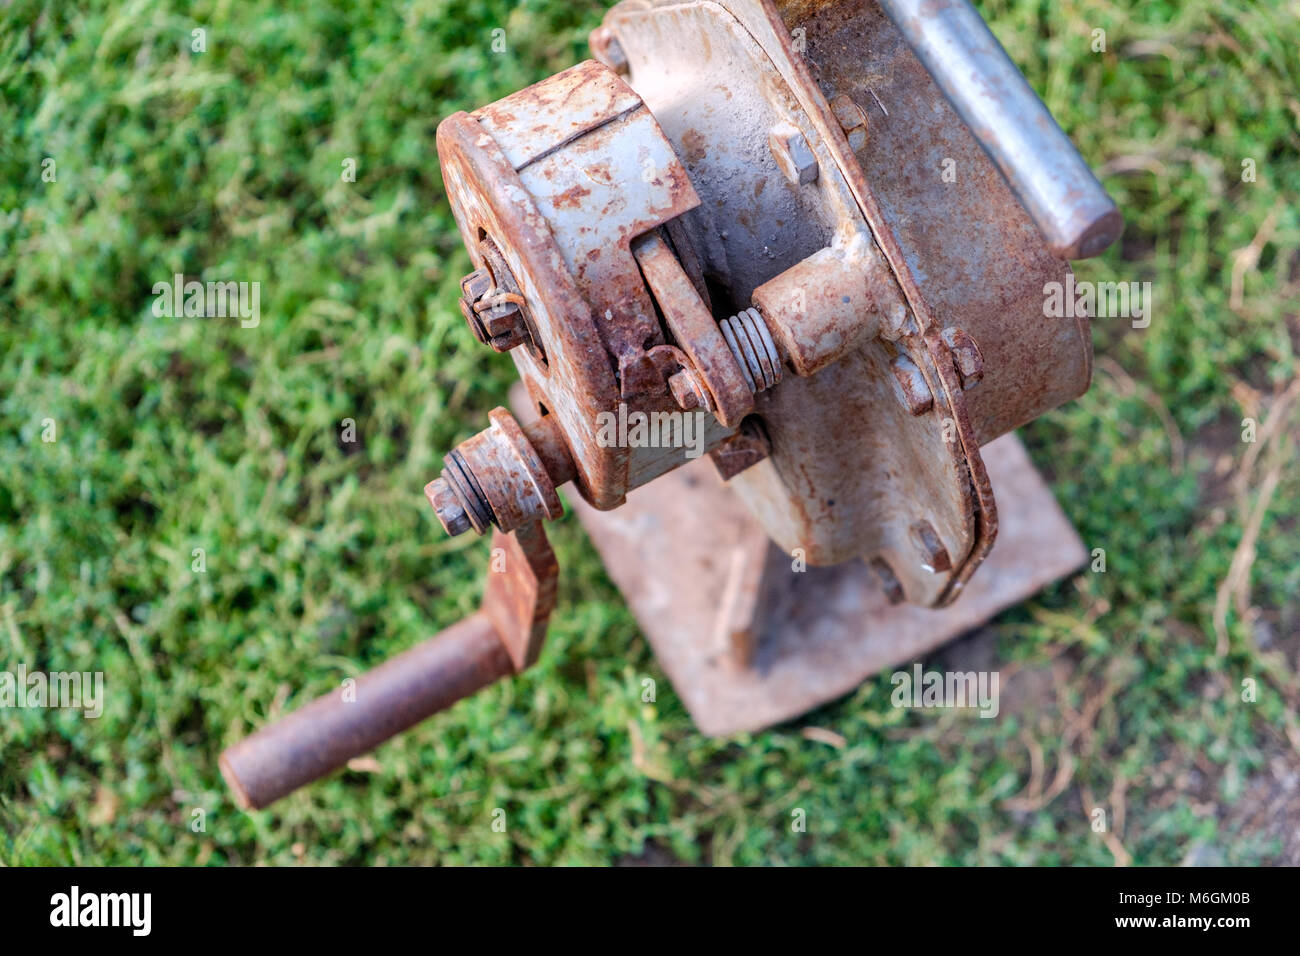 House lifting jack. Old rusty mechanical screw jack. Close-up Stock Photo